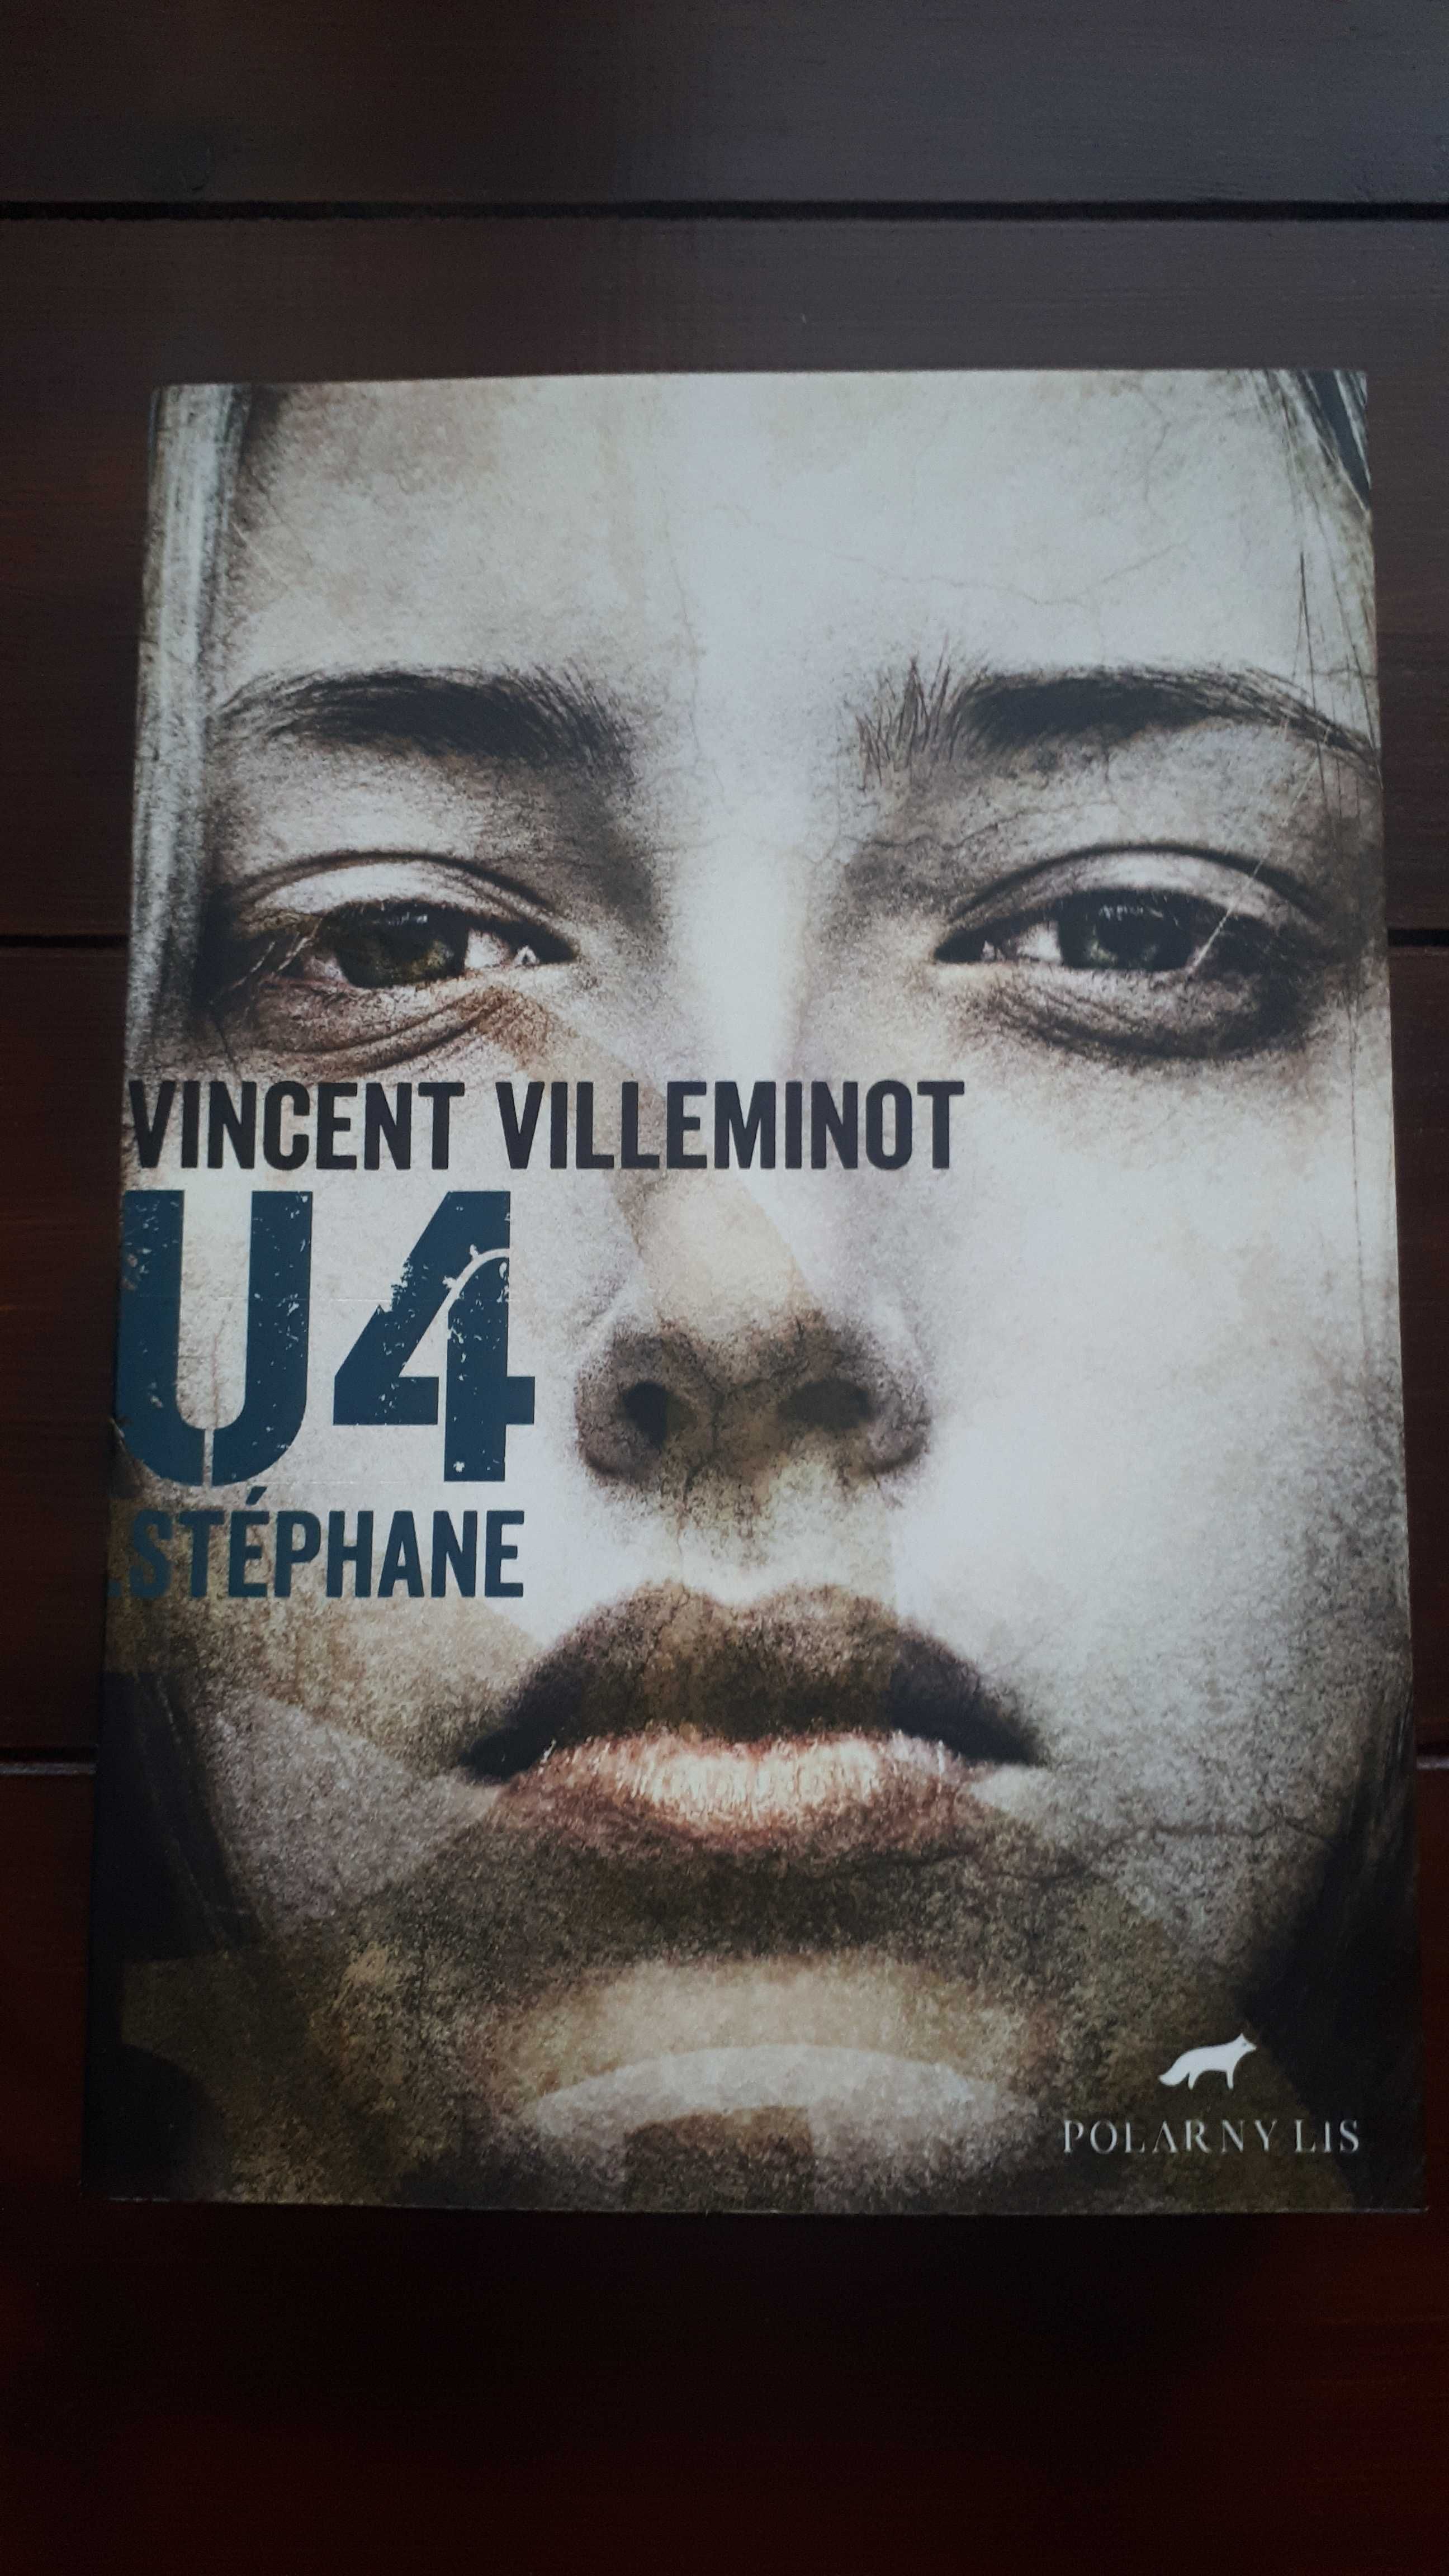 Książka "U4 Stephane" Vincent Villeminot